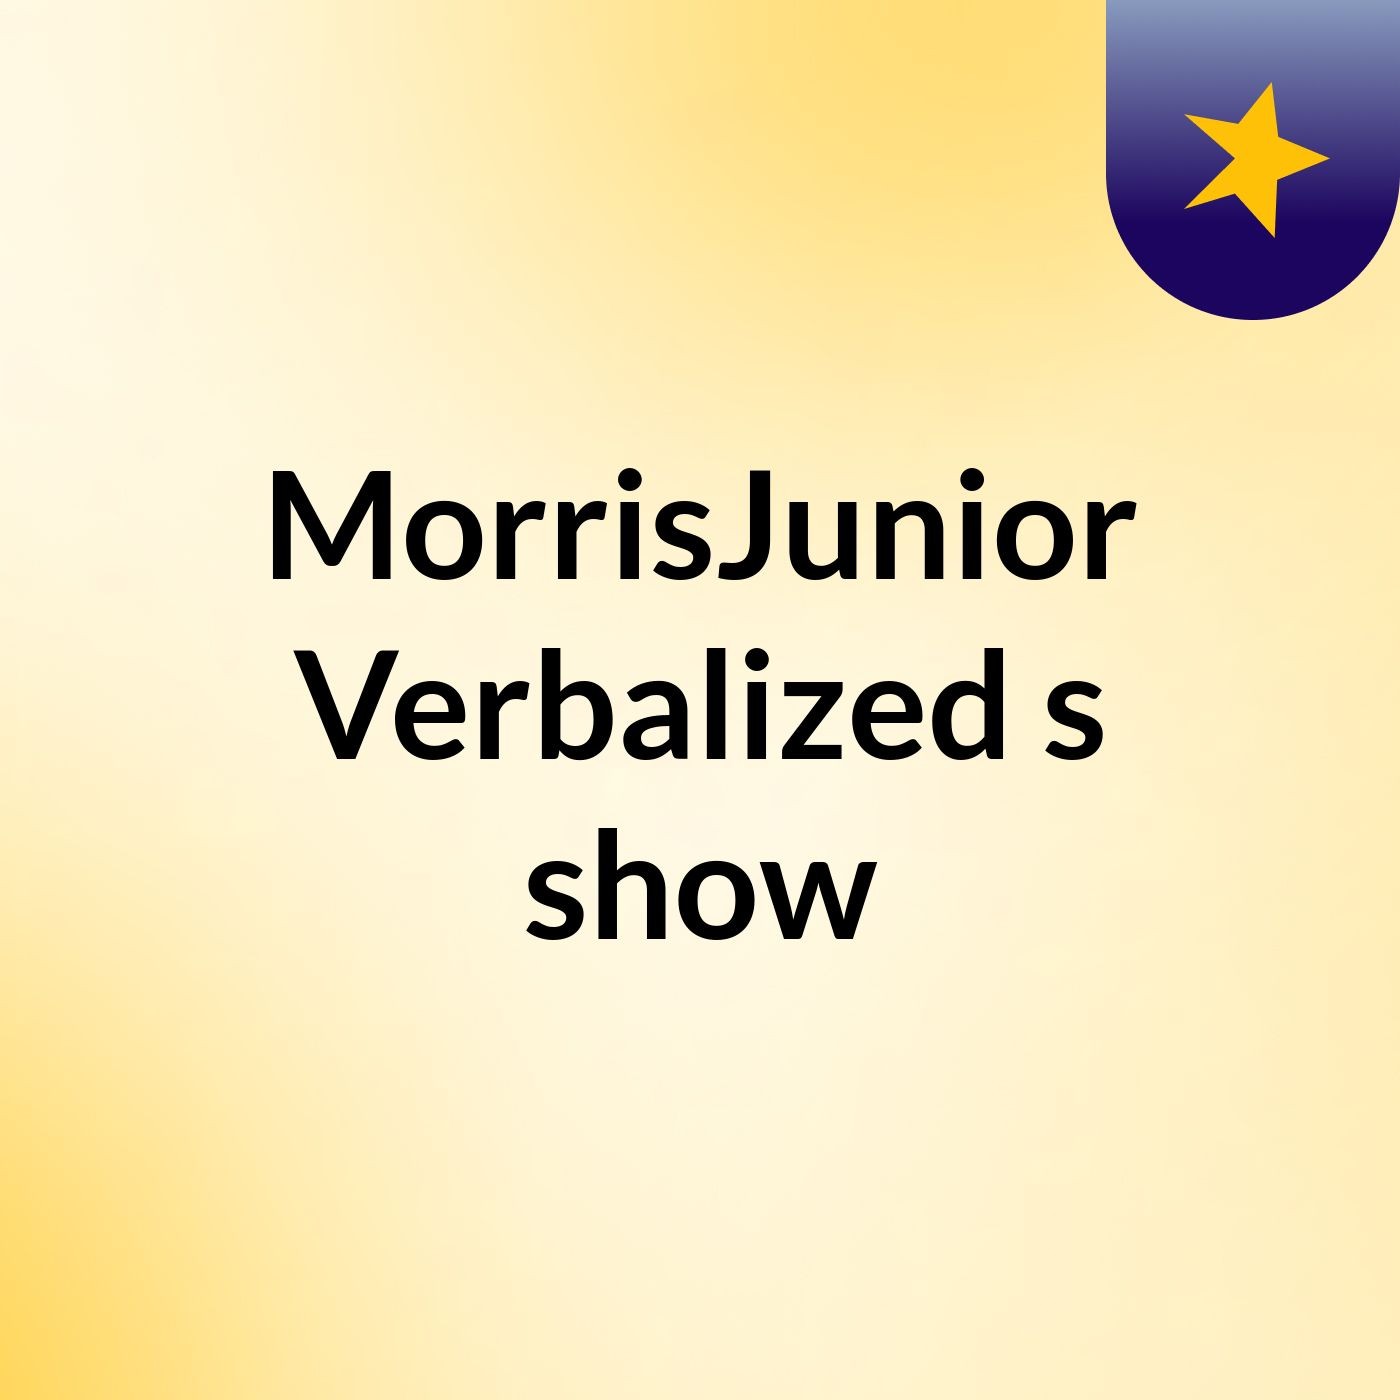 MorrisJunior Verbalized's show